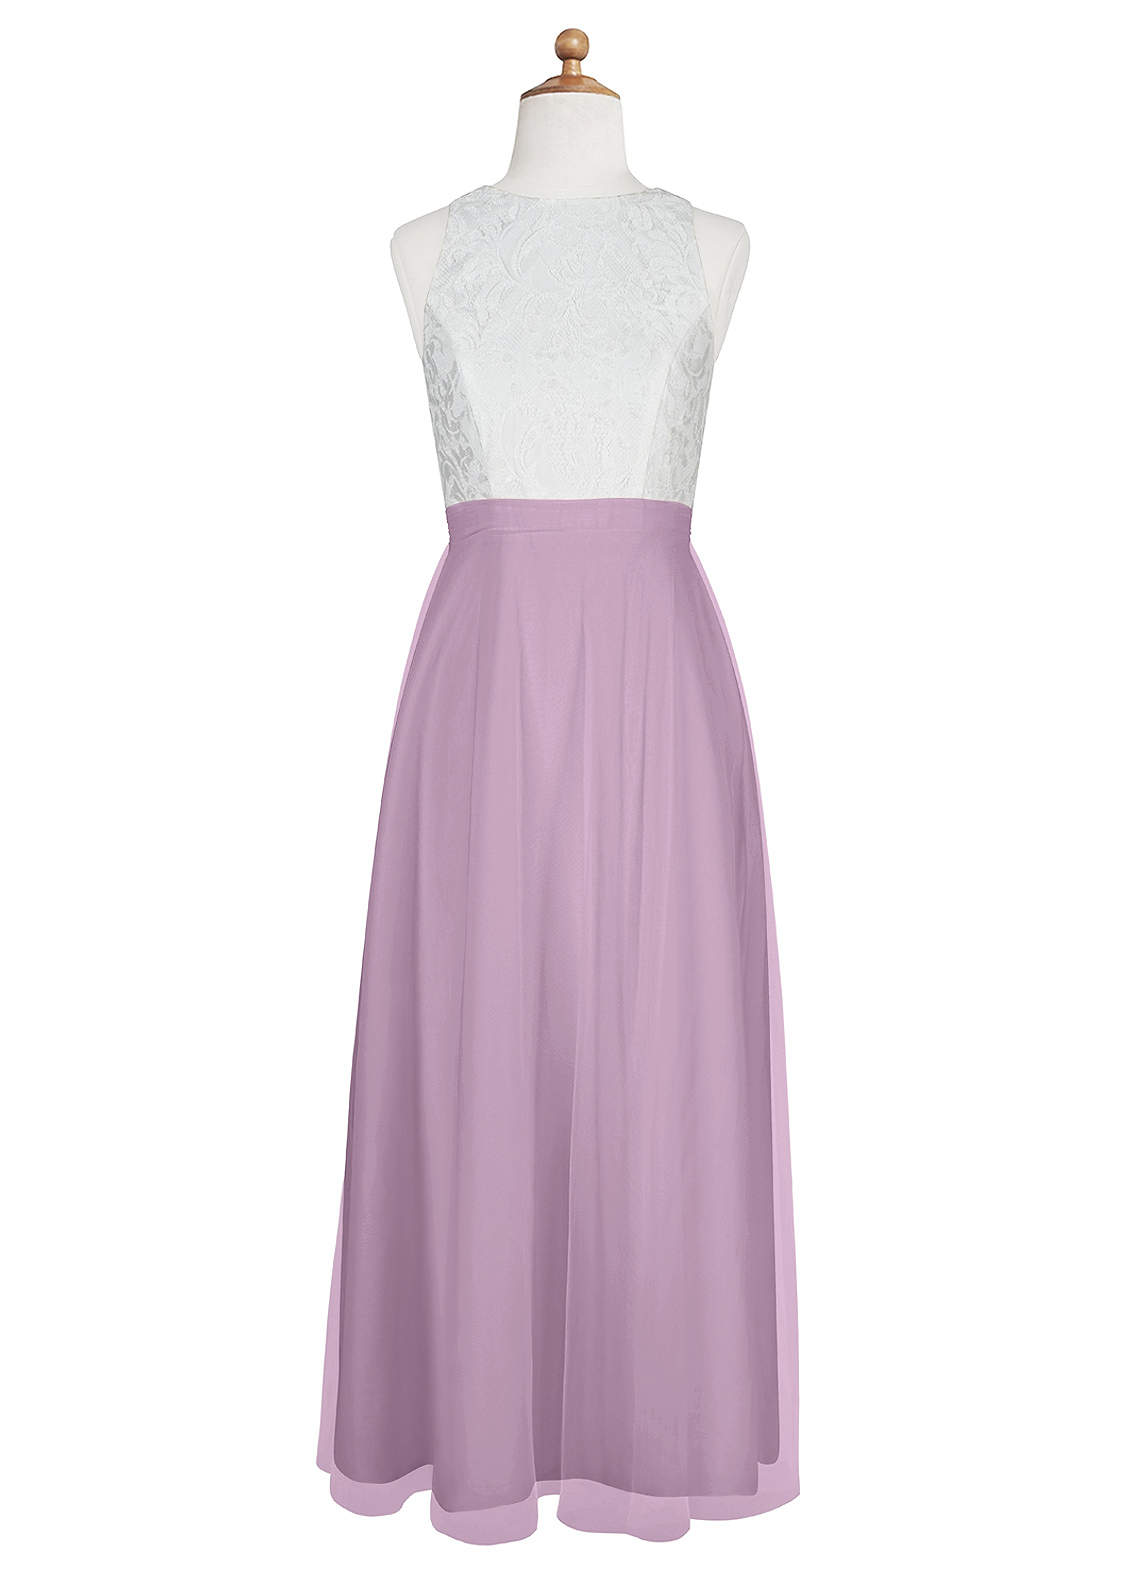 Azazie Albertine A-Line Lace Tulle Floor-Length Junior Bridesmaid Dress image1